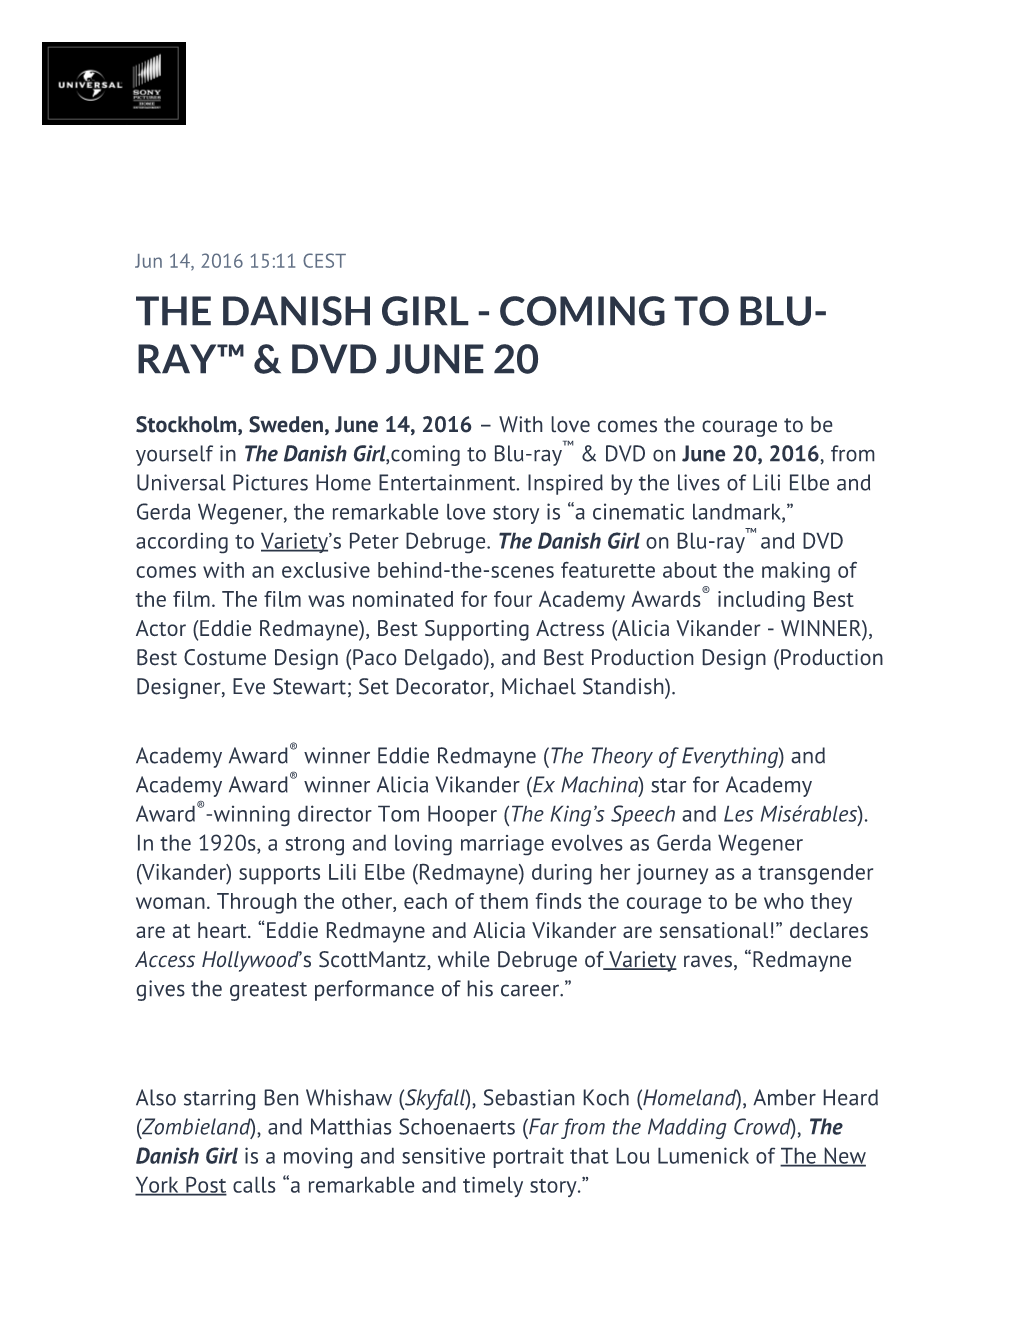 The Danish Girl - Coming to Blu- Ray™ & Dvd June 20